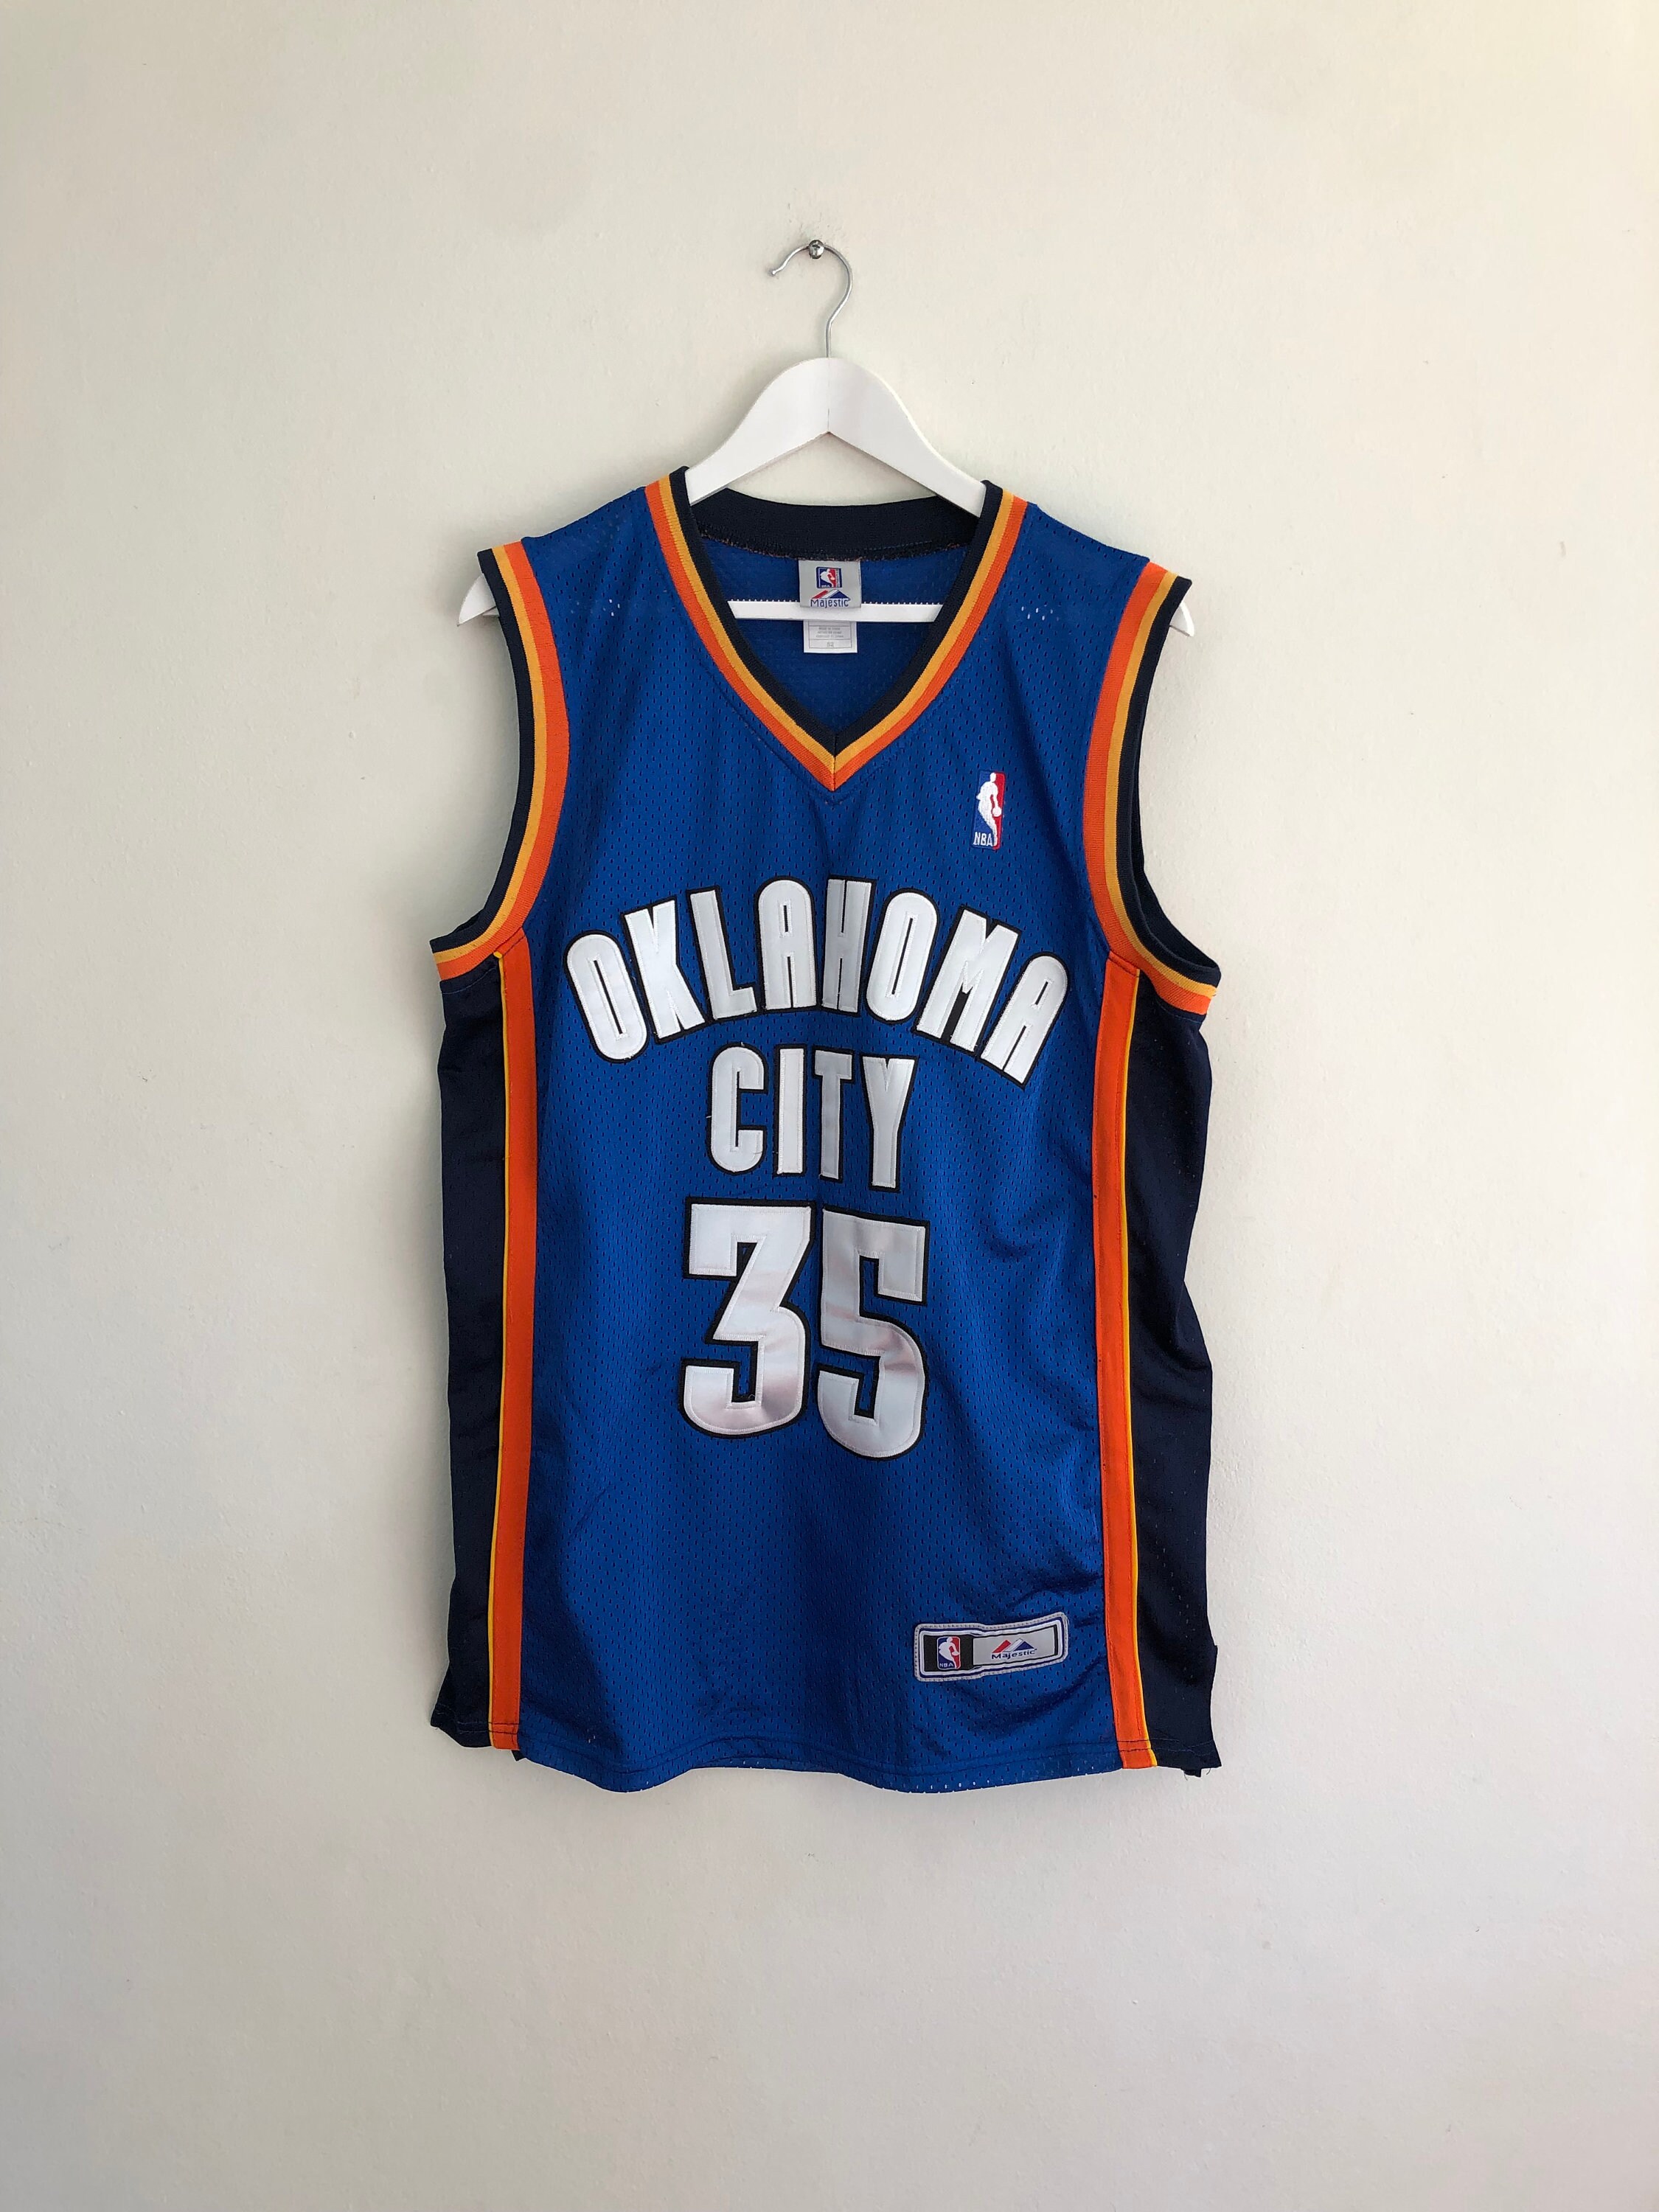 Adidas Kevin Durant Oklahoma City Thunder Blue NBA Stitched Jersey #35  Youth M